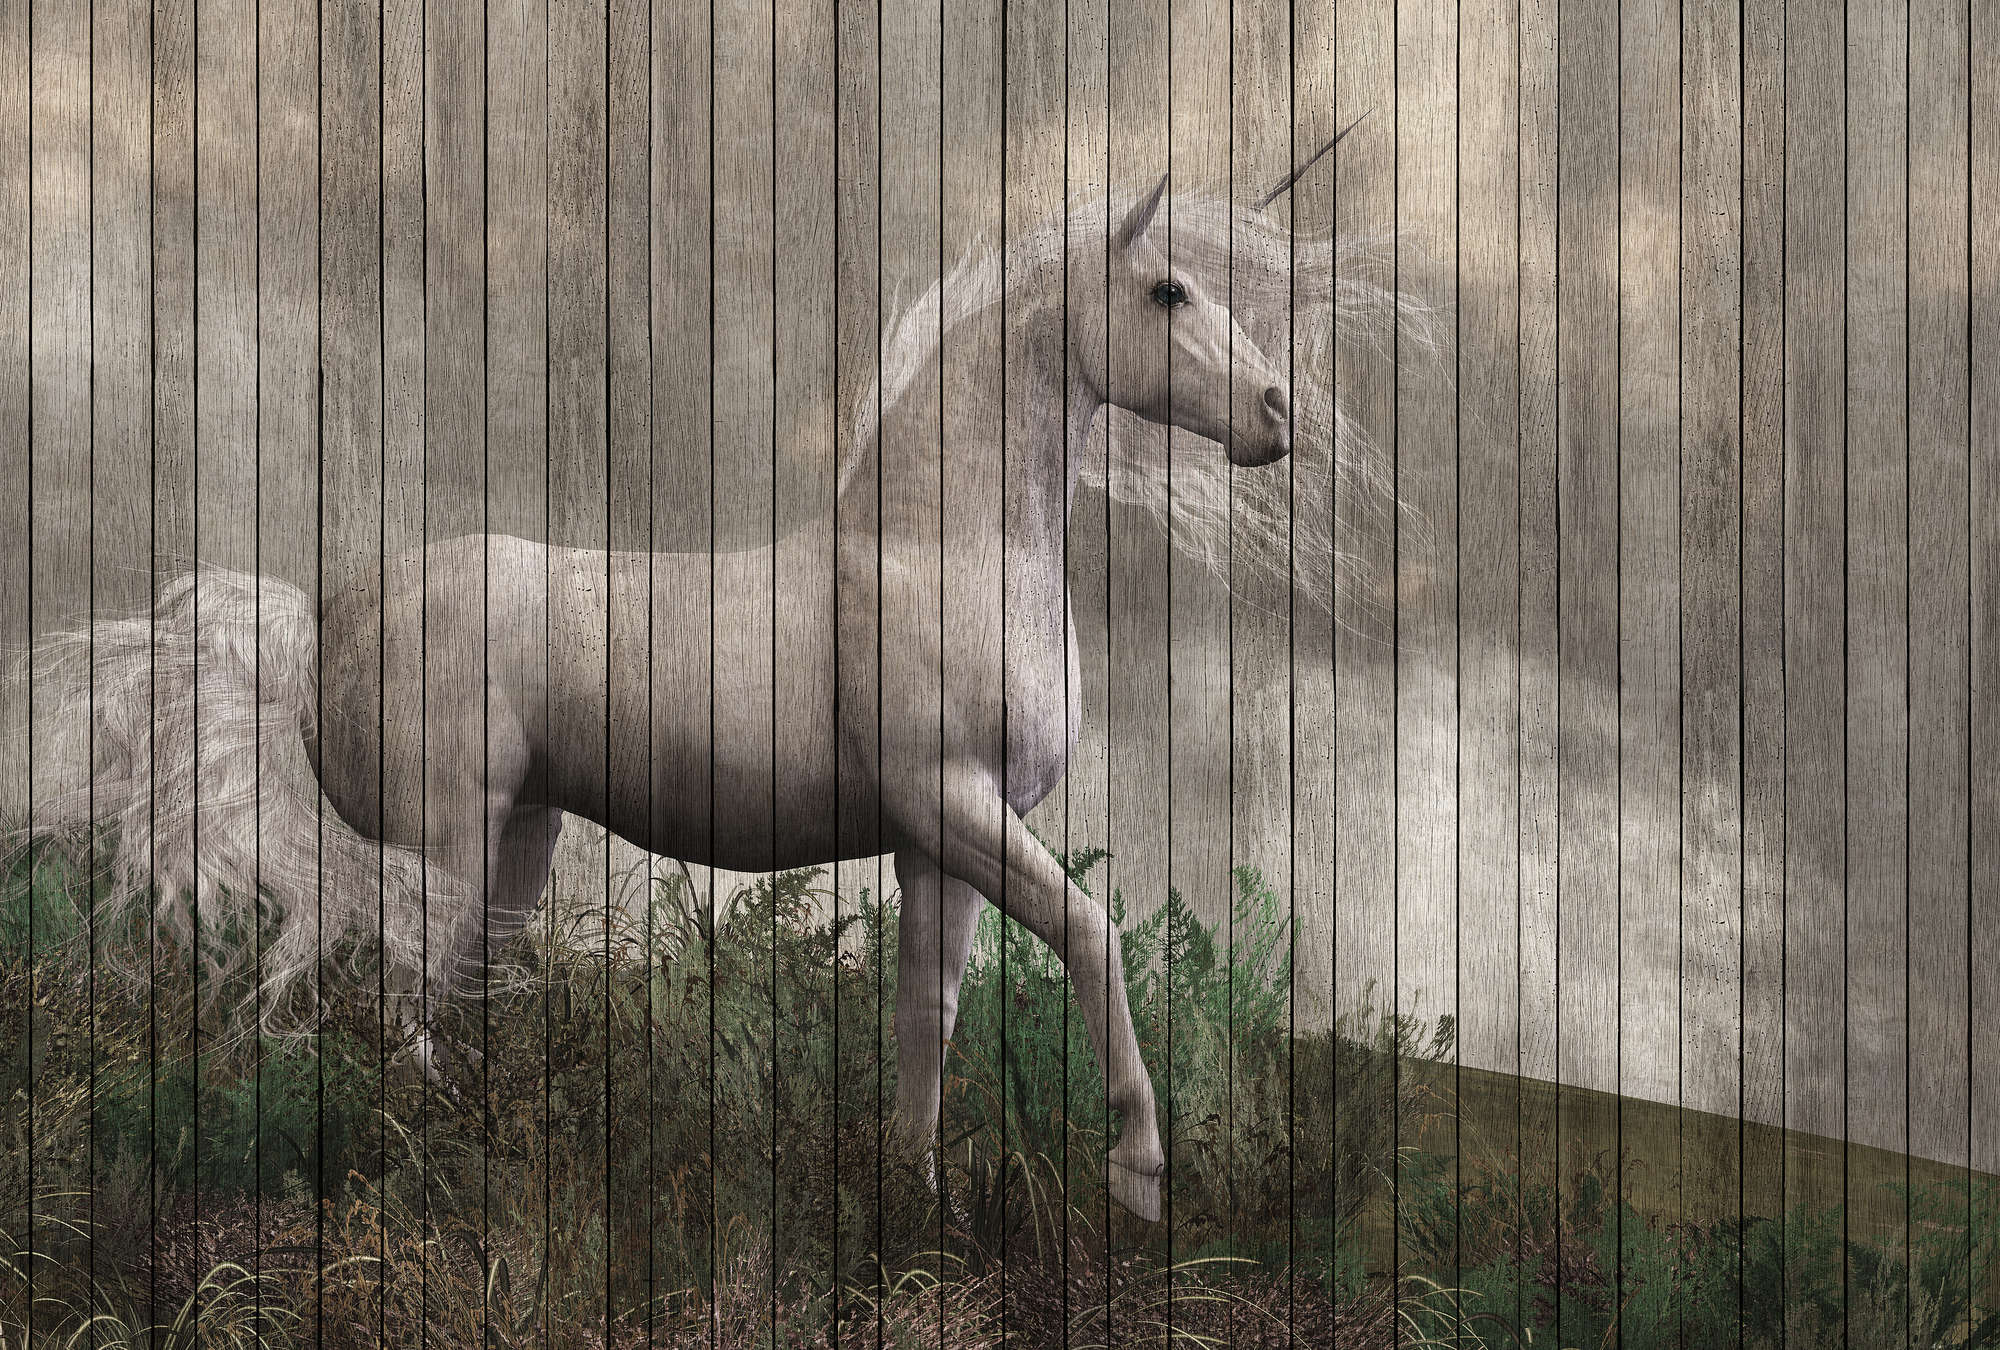             Fantasy 3 - Unicorn Wallpaper with Wooden Board Optics - Beige, Brown | Matt Smooth Non-woven
        